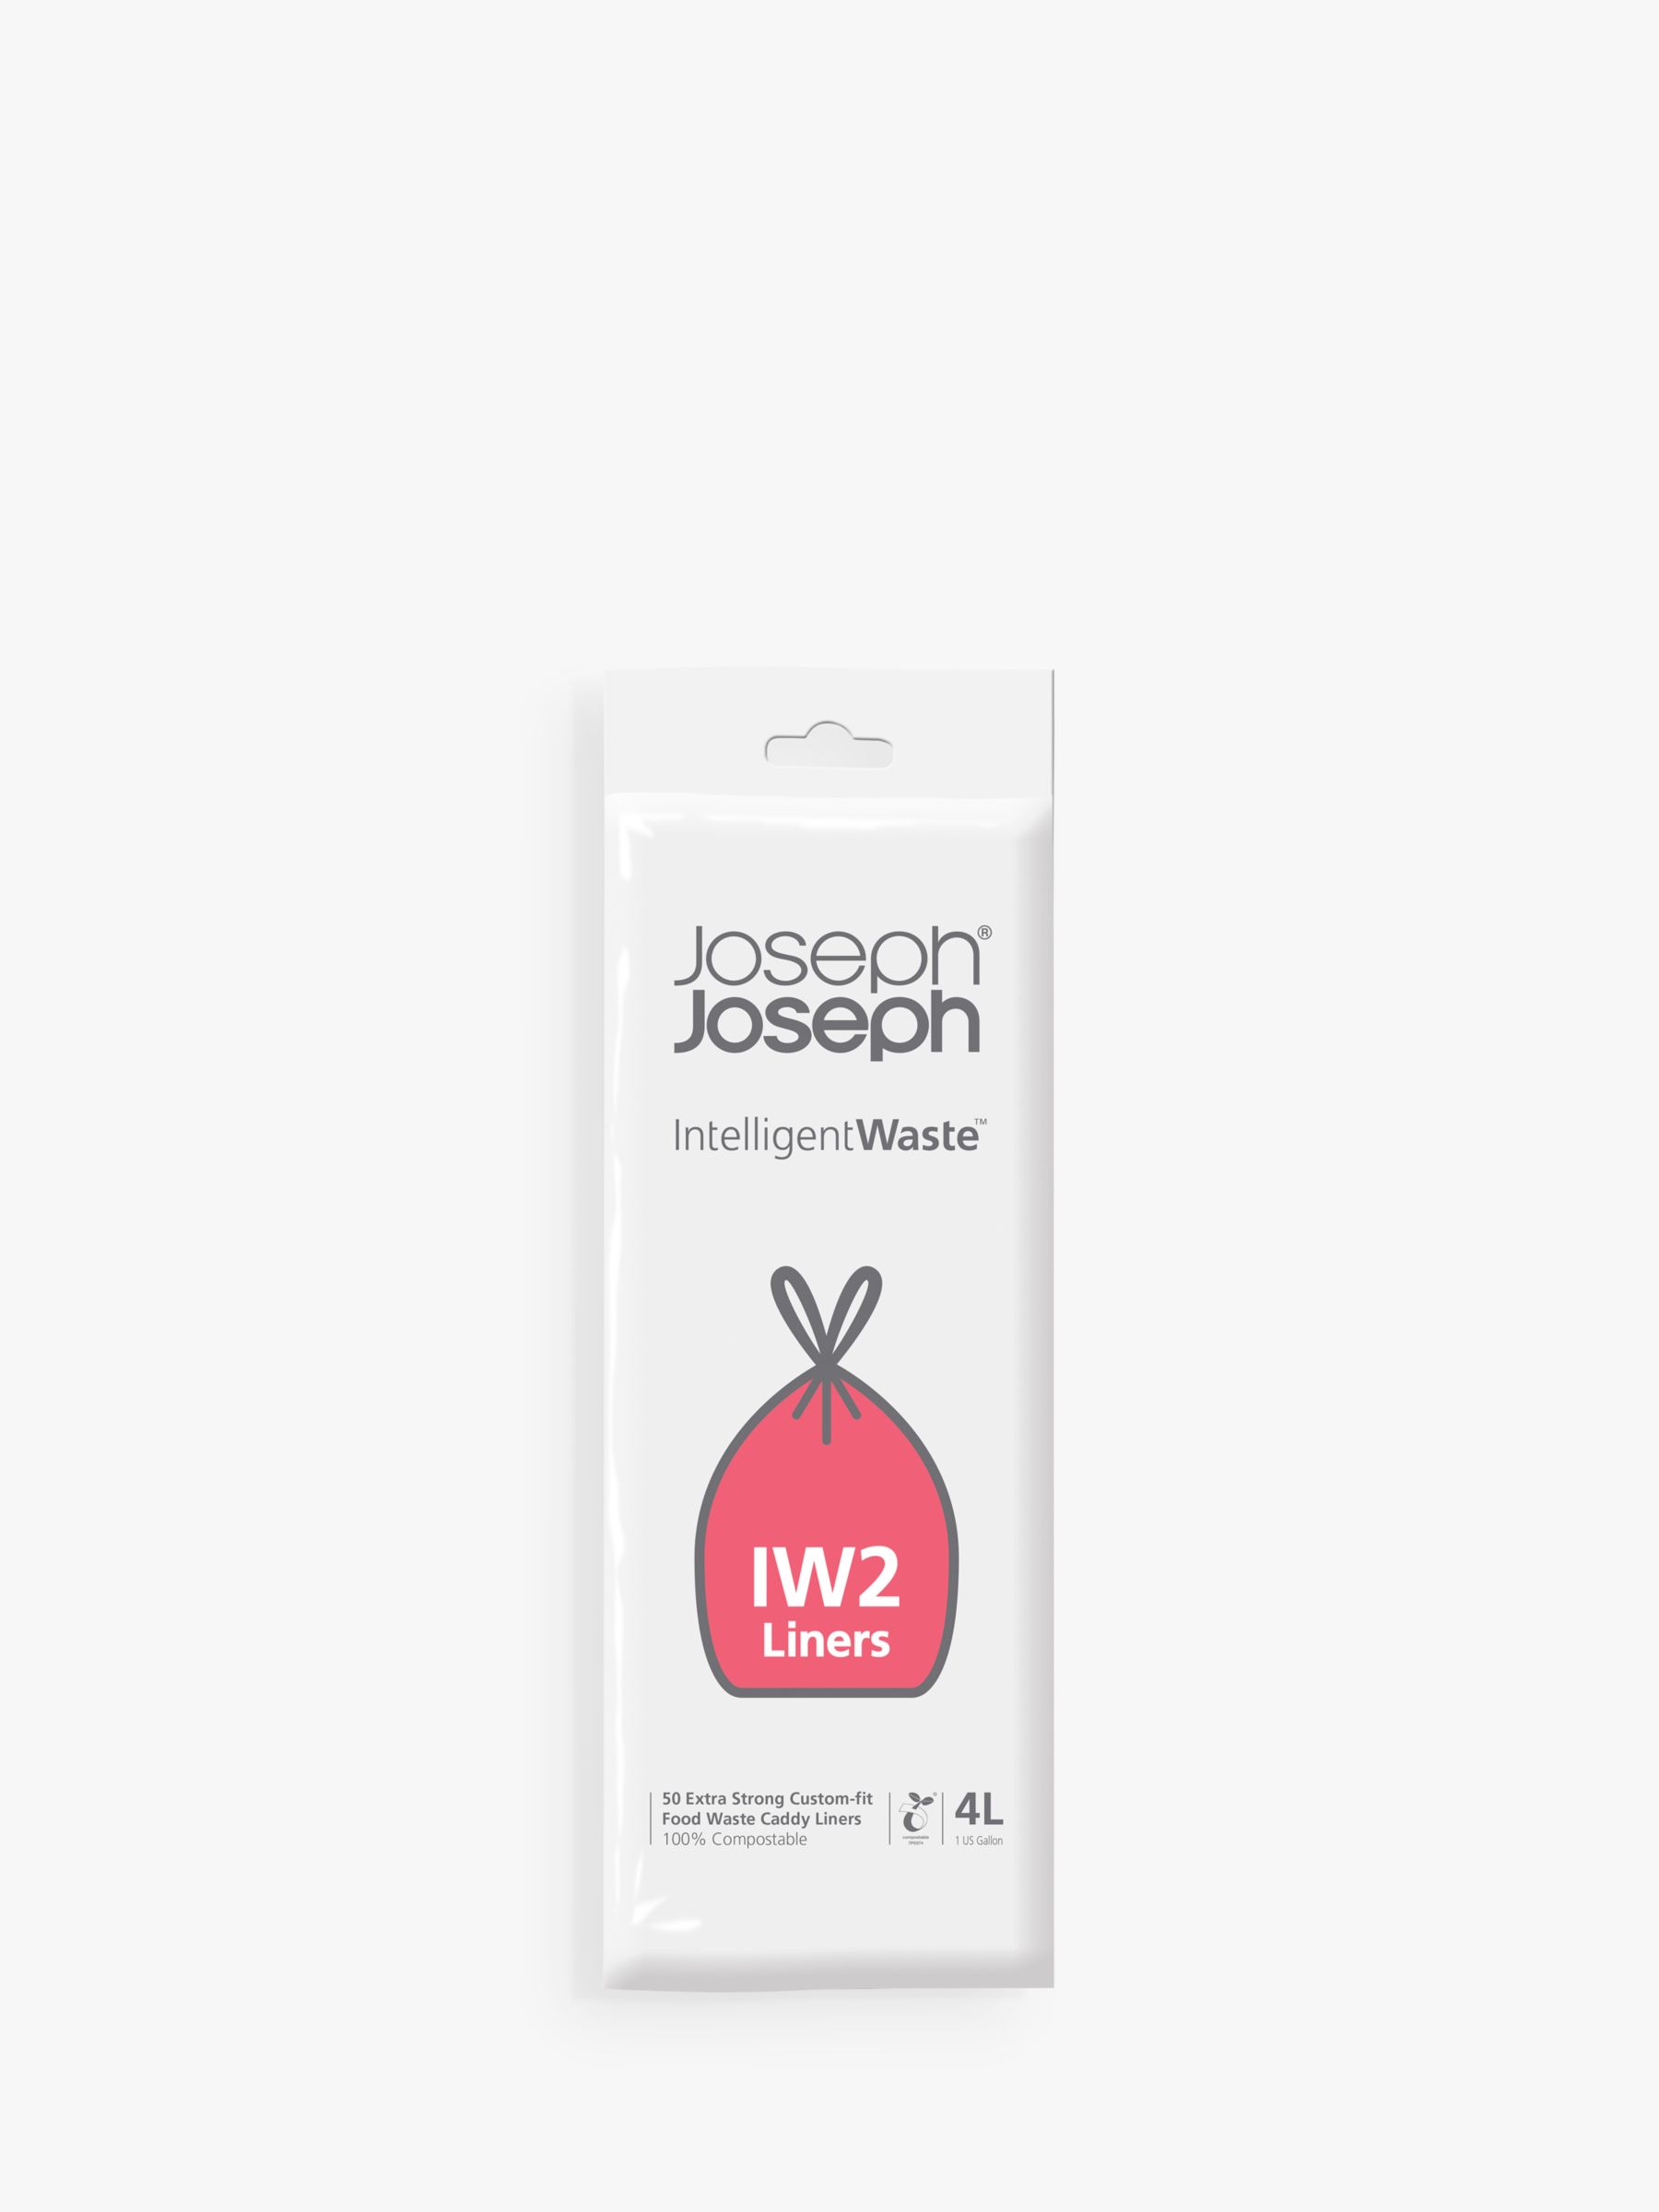 Joseph Joseph IW1 General Waste Bags, Pack of 20 